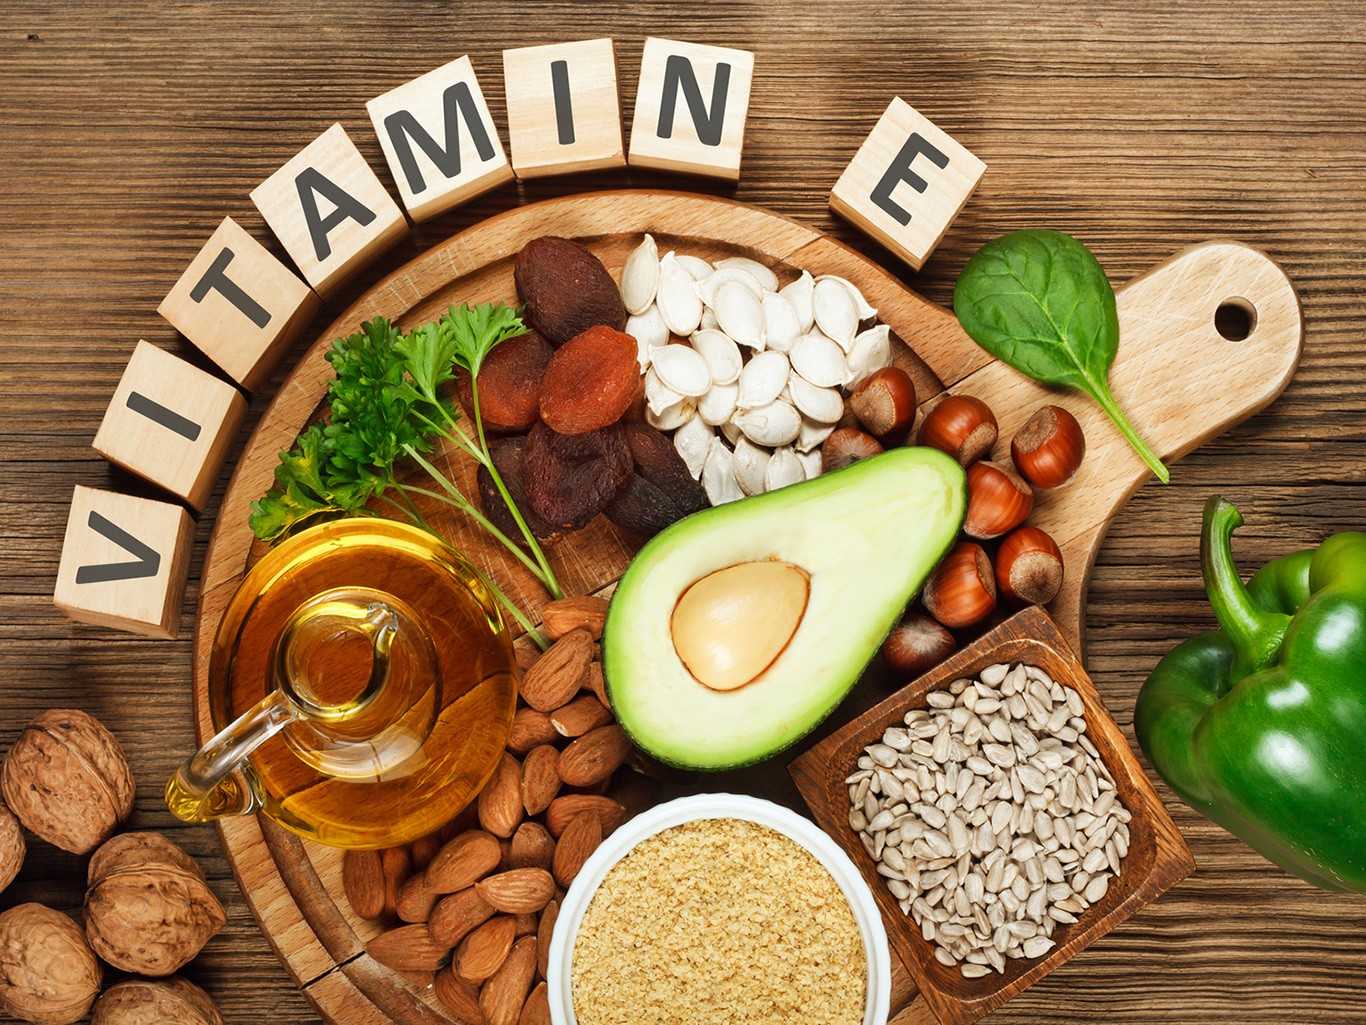 Витамин е, или «витамин молодости» | университетская клиника